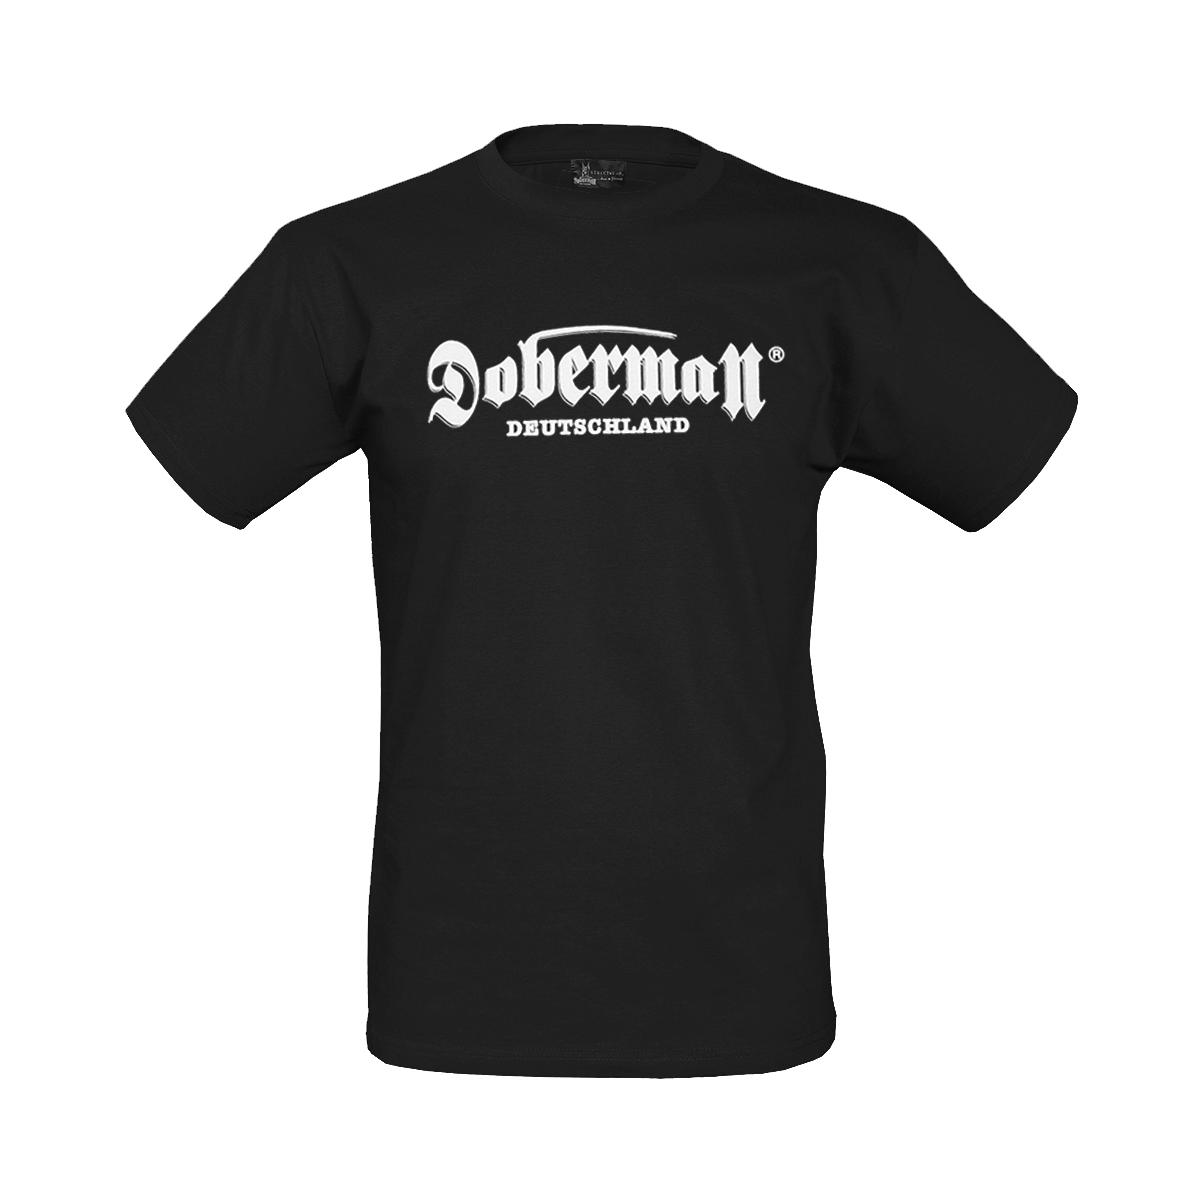 Doberman - Männer T-Shirt - Crusaders